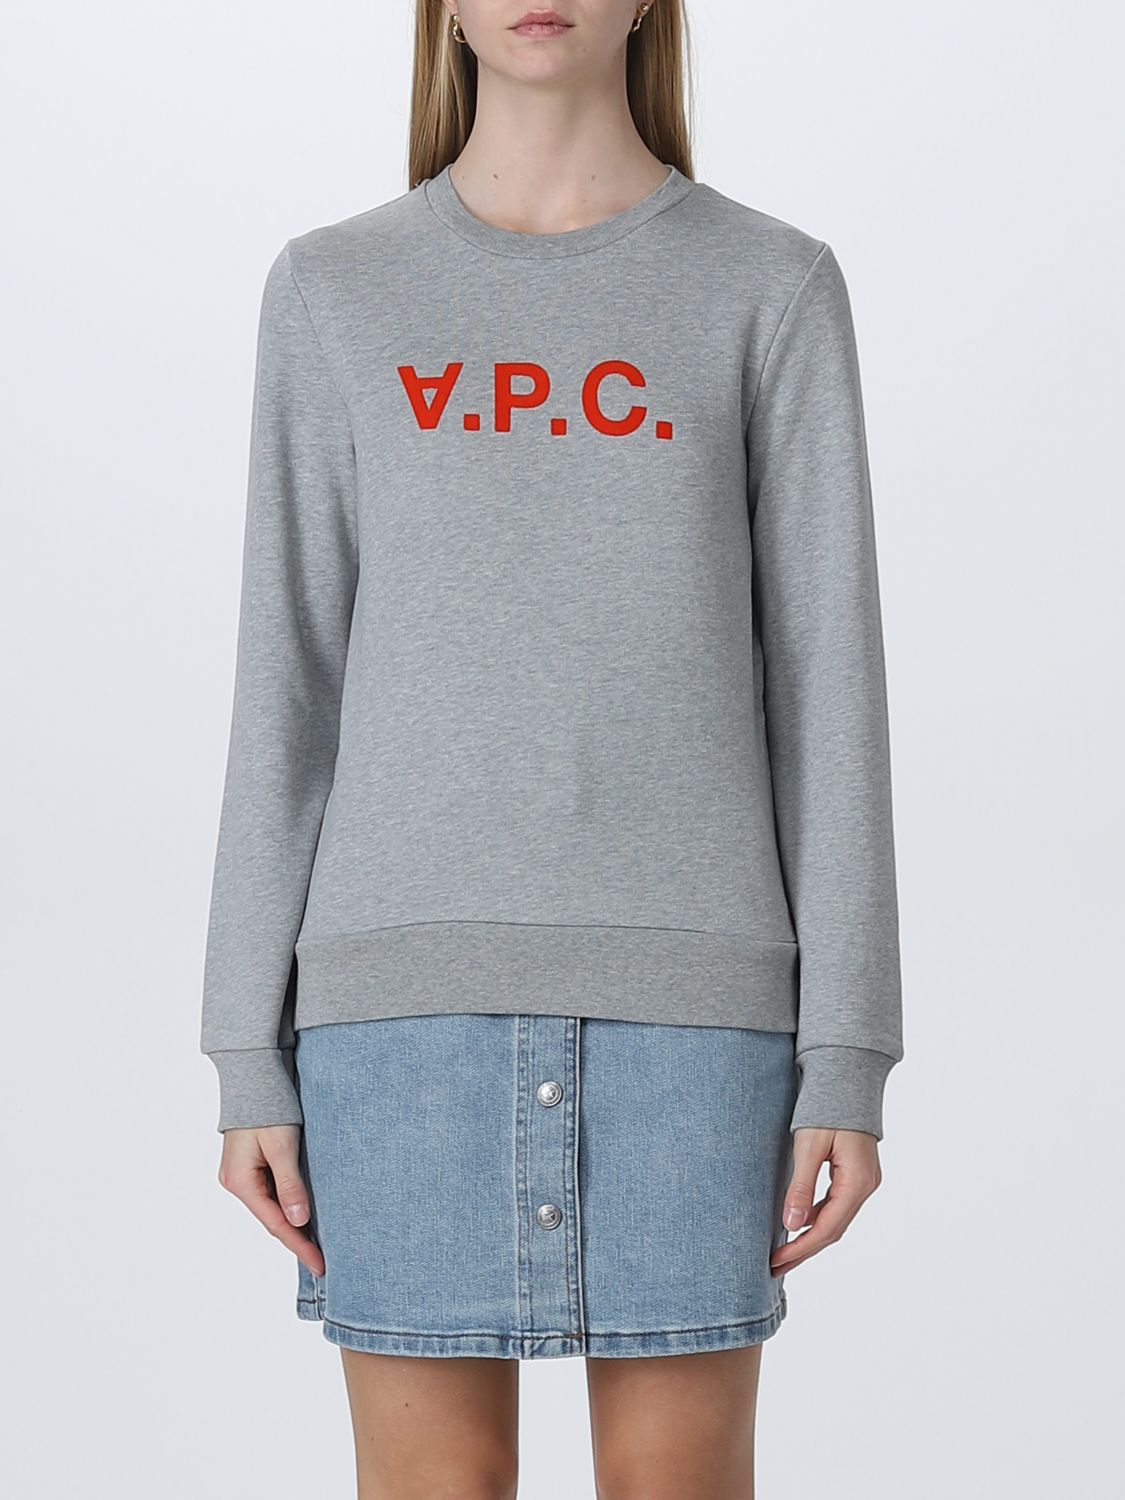 Shop Apc Sweatshirt A.p.c. Woman Color Grey